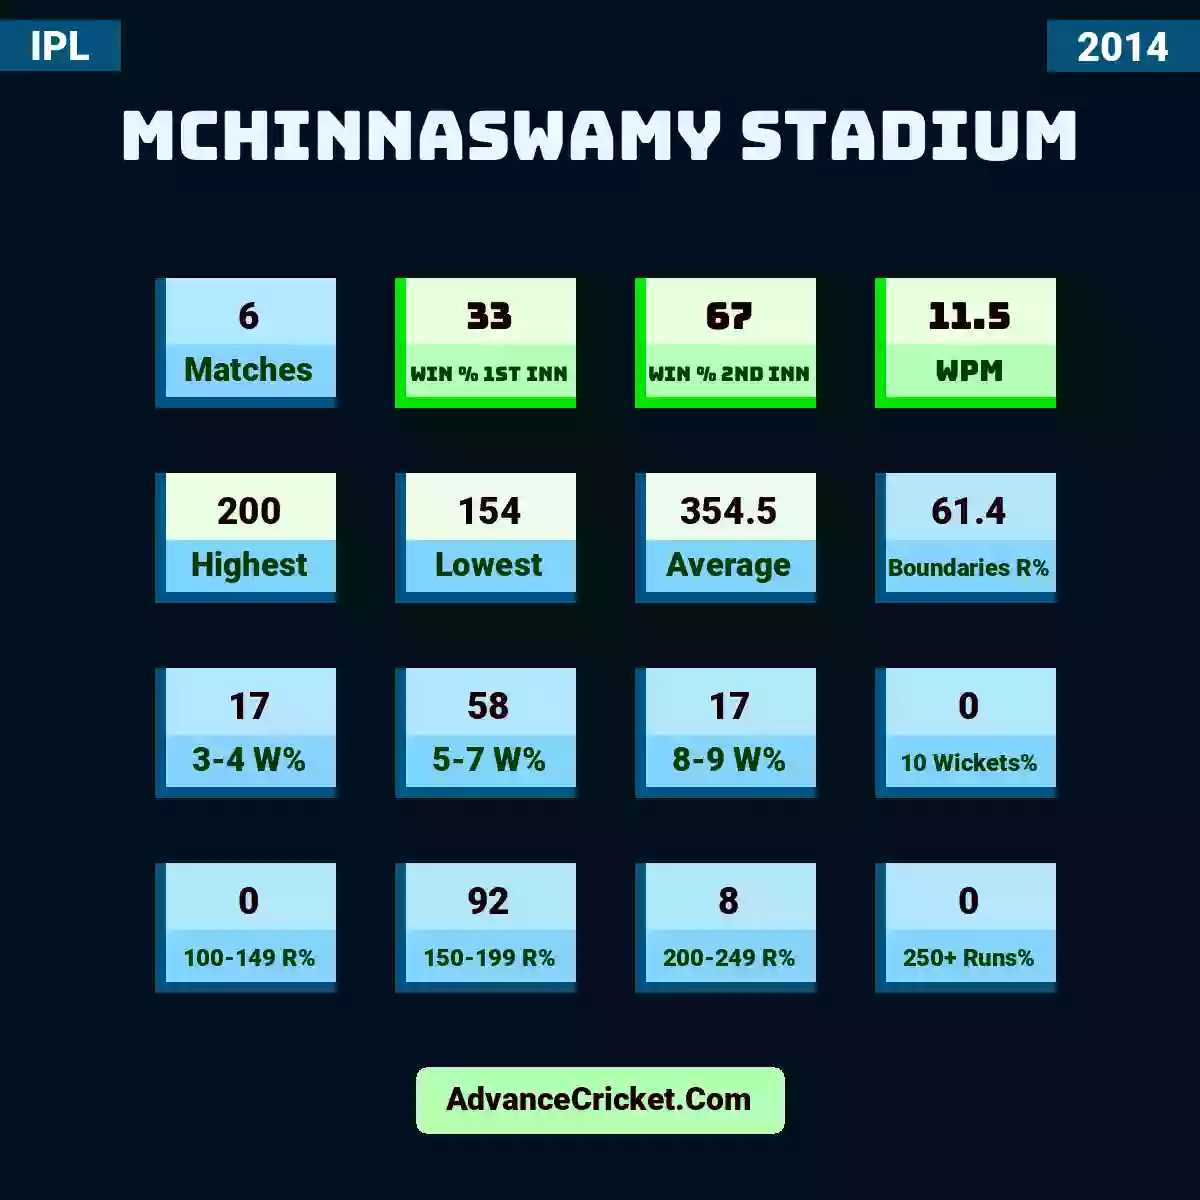 Image showing MChinnaswamy Stadium with Matches: 6, Win % 1st Inn: 33, Win % 2nd Inn: 67, WPM: 11.5, Highest: 200, Lowest: 154, Average: 354.5, Boundaries R%: 61.4, 3-4 W%: 17, 5-7 W%: 58, 8-9 W%: 17, 10 Wickets%: 0, 100-149 R%: 0, 150-199 R%: 92, 200-249 R%: 8, 250+ Runs%: 0.